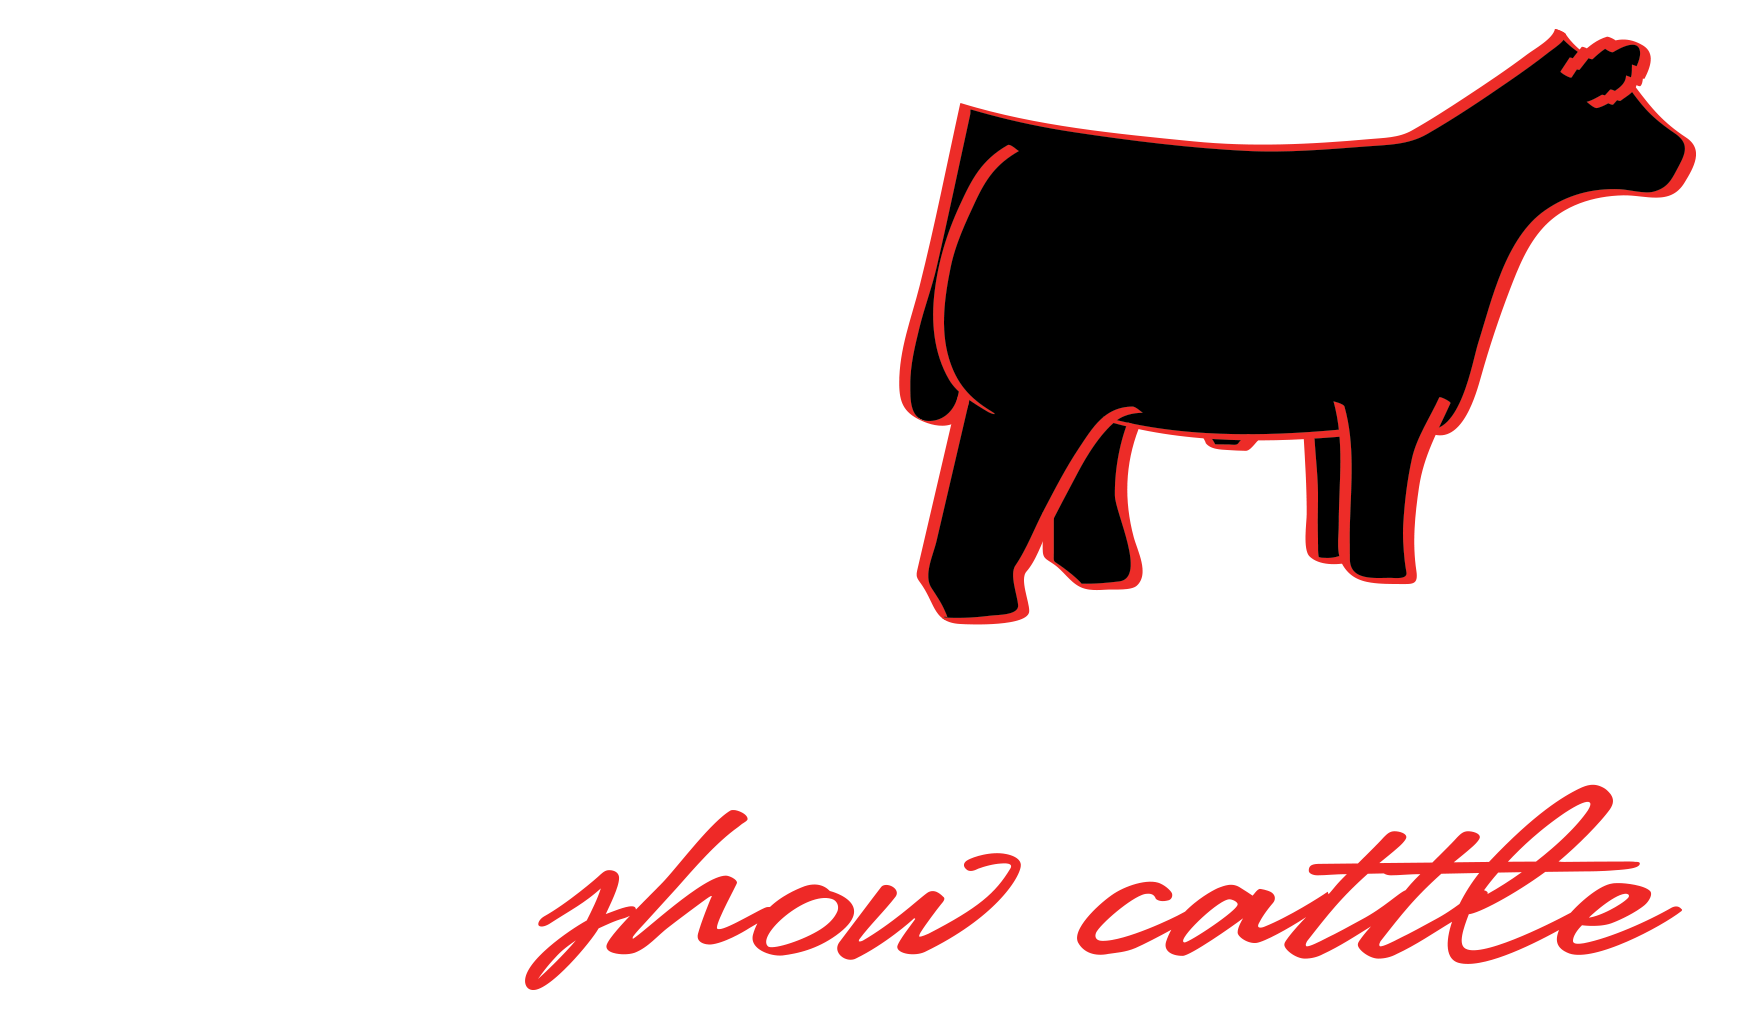 Drew Show Cattle Logo Design   The Showtimes Junior Livestock Magazine